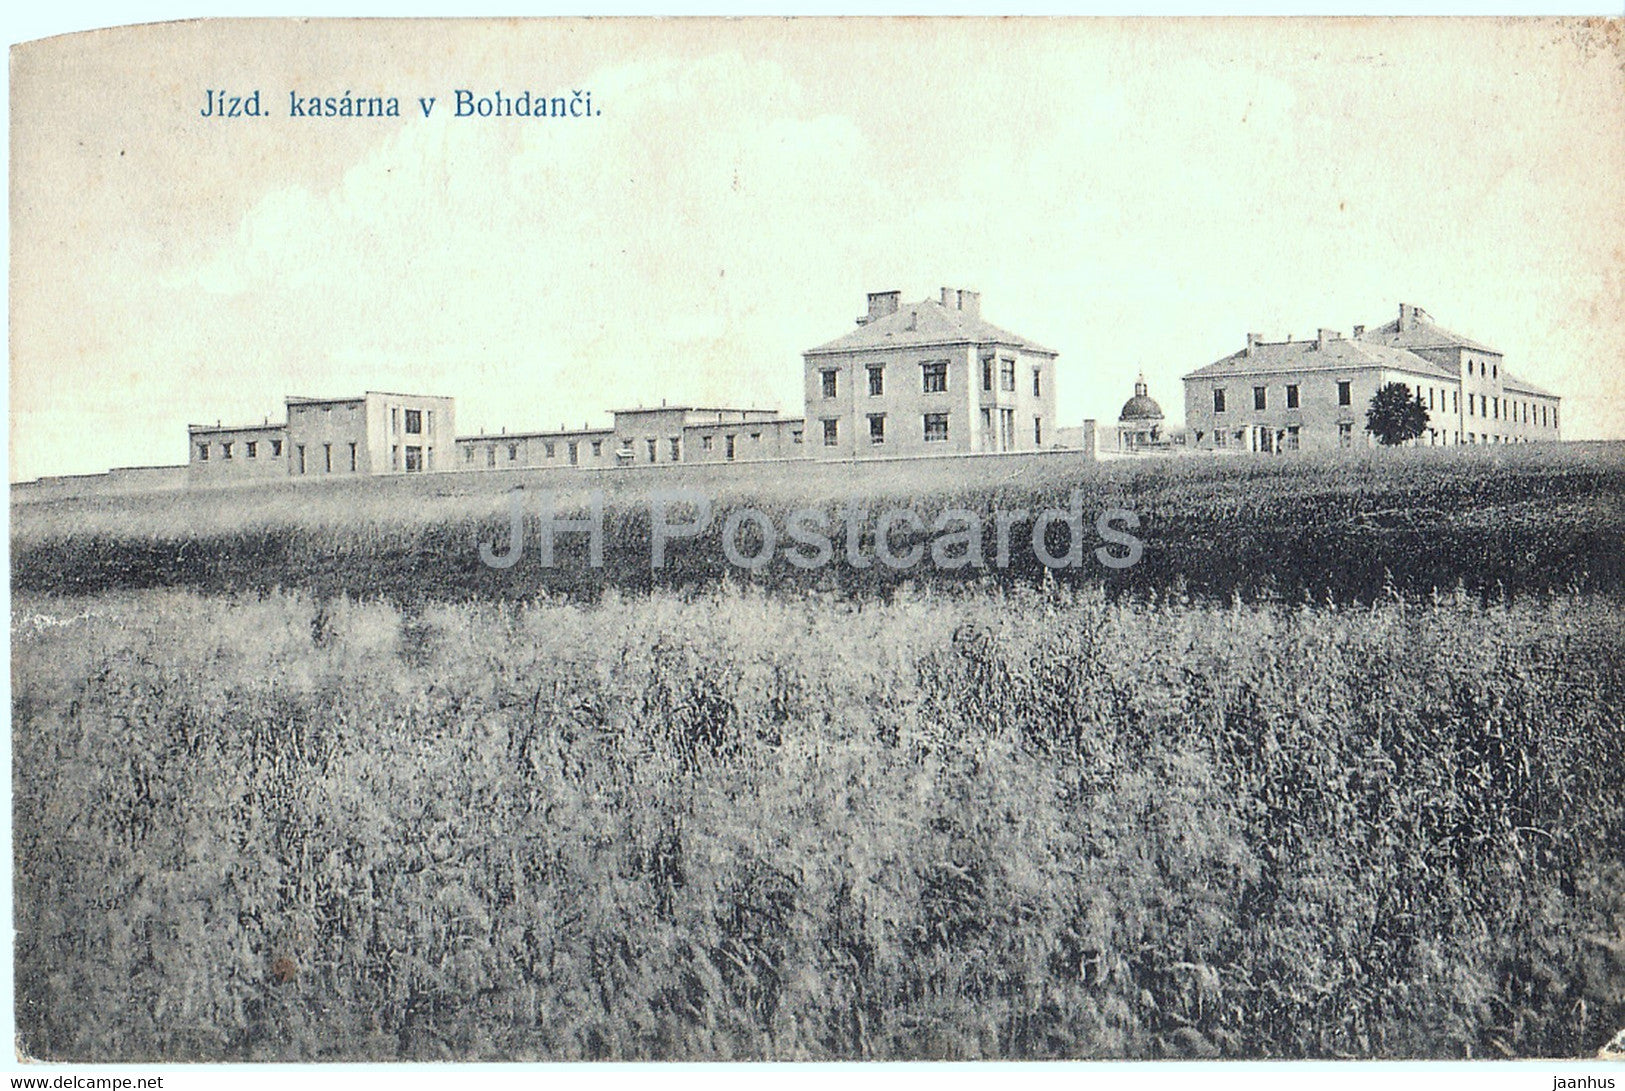 Jizd kasarna v Bohdanci - Bohdanec - barracks - military - old postcard - 1912 - Czech Republic - used - JH Postcards